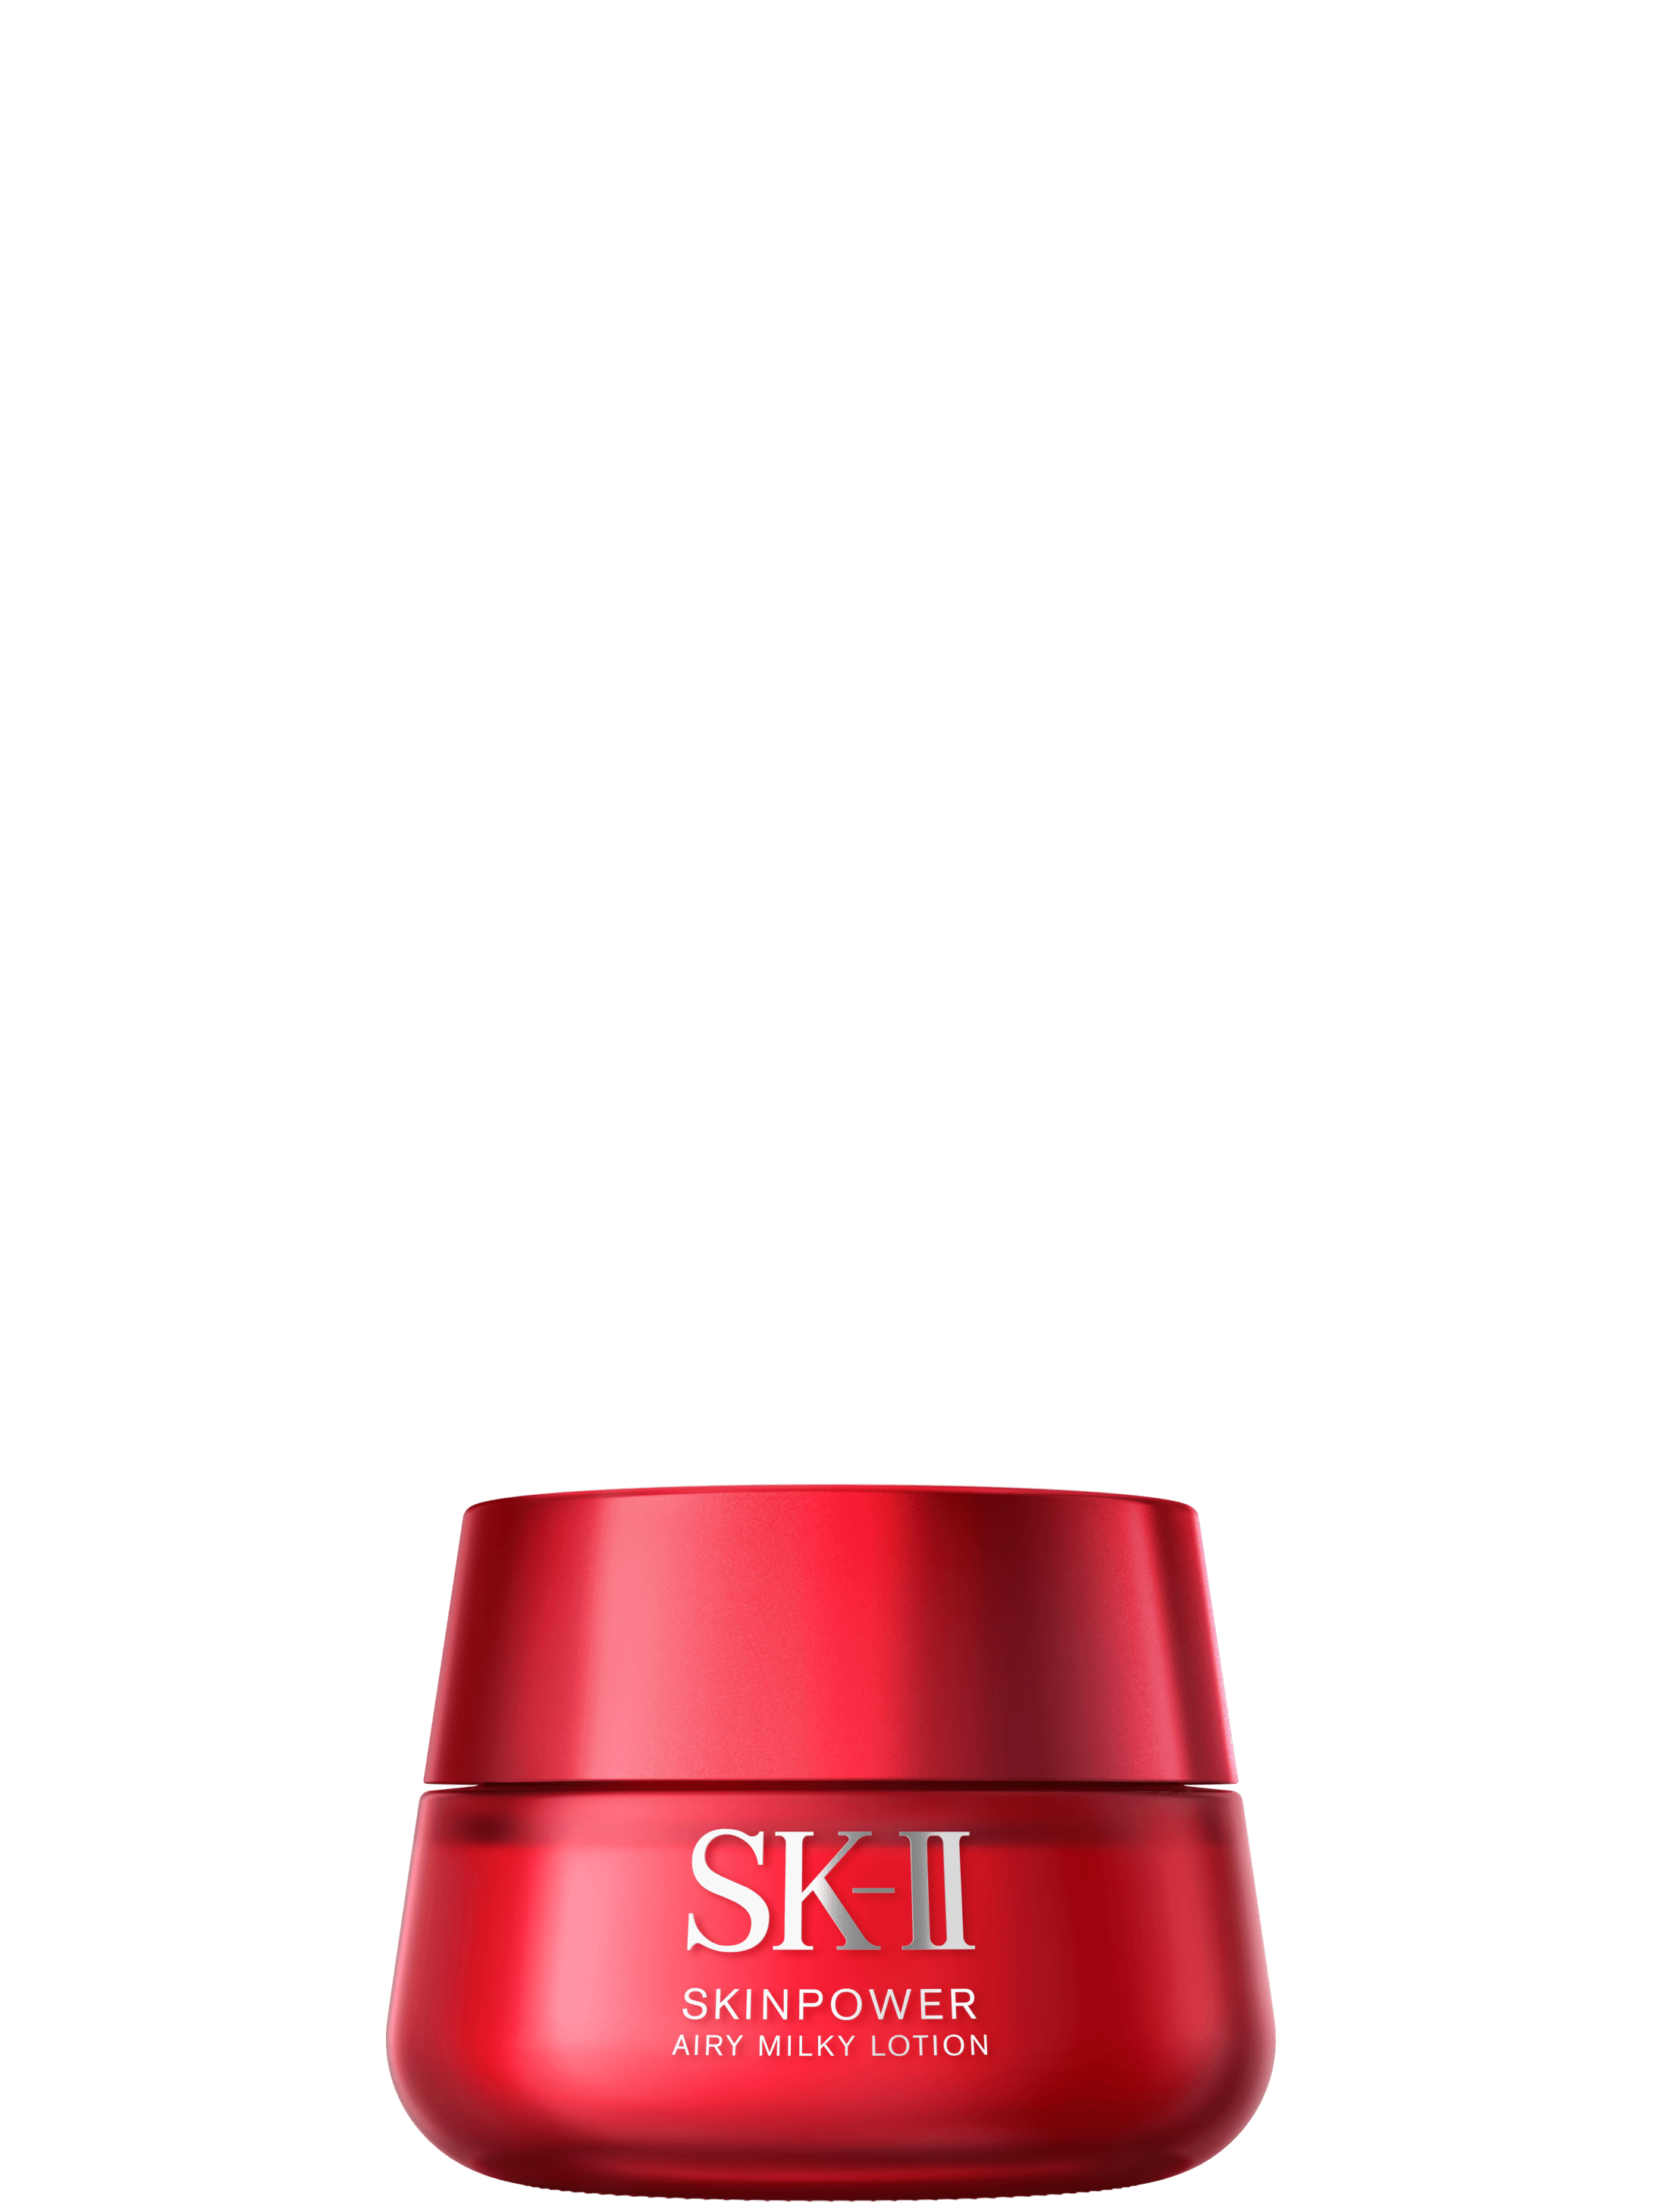 SK-II スキンパワーエアリーミルキーローション80g 基礎化粧品 | www ...